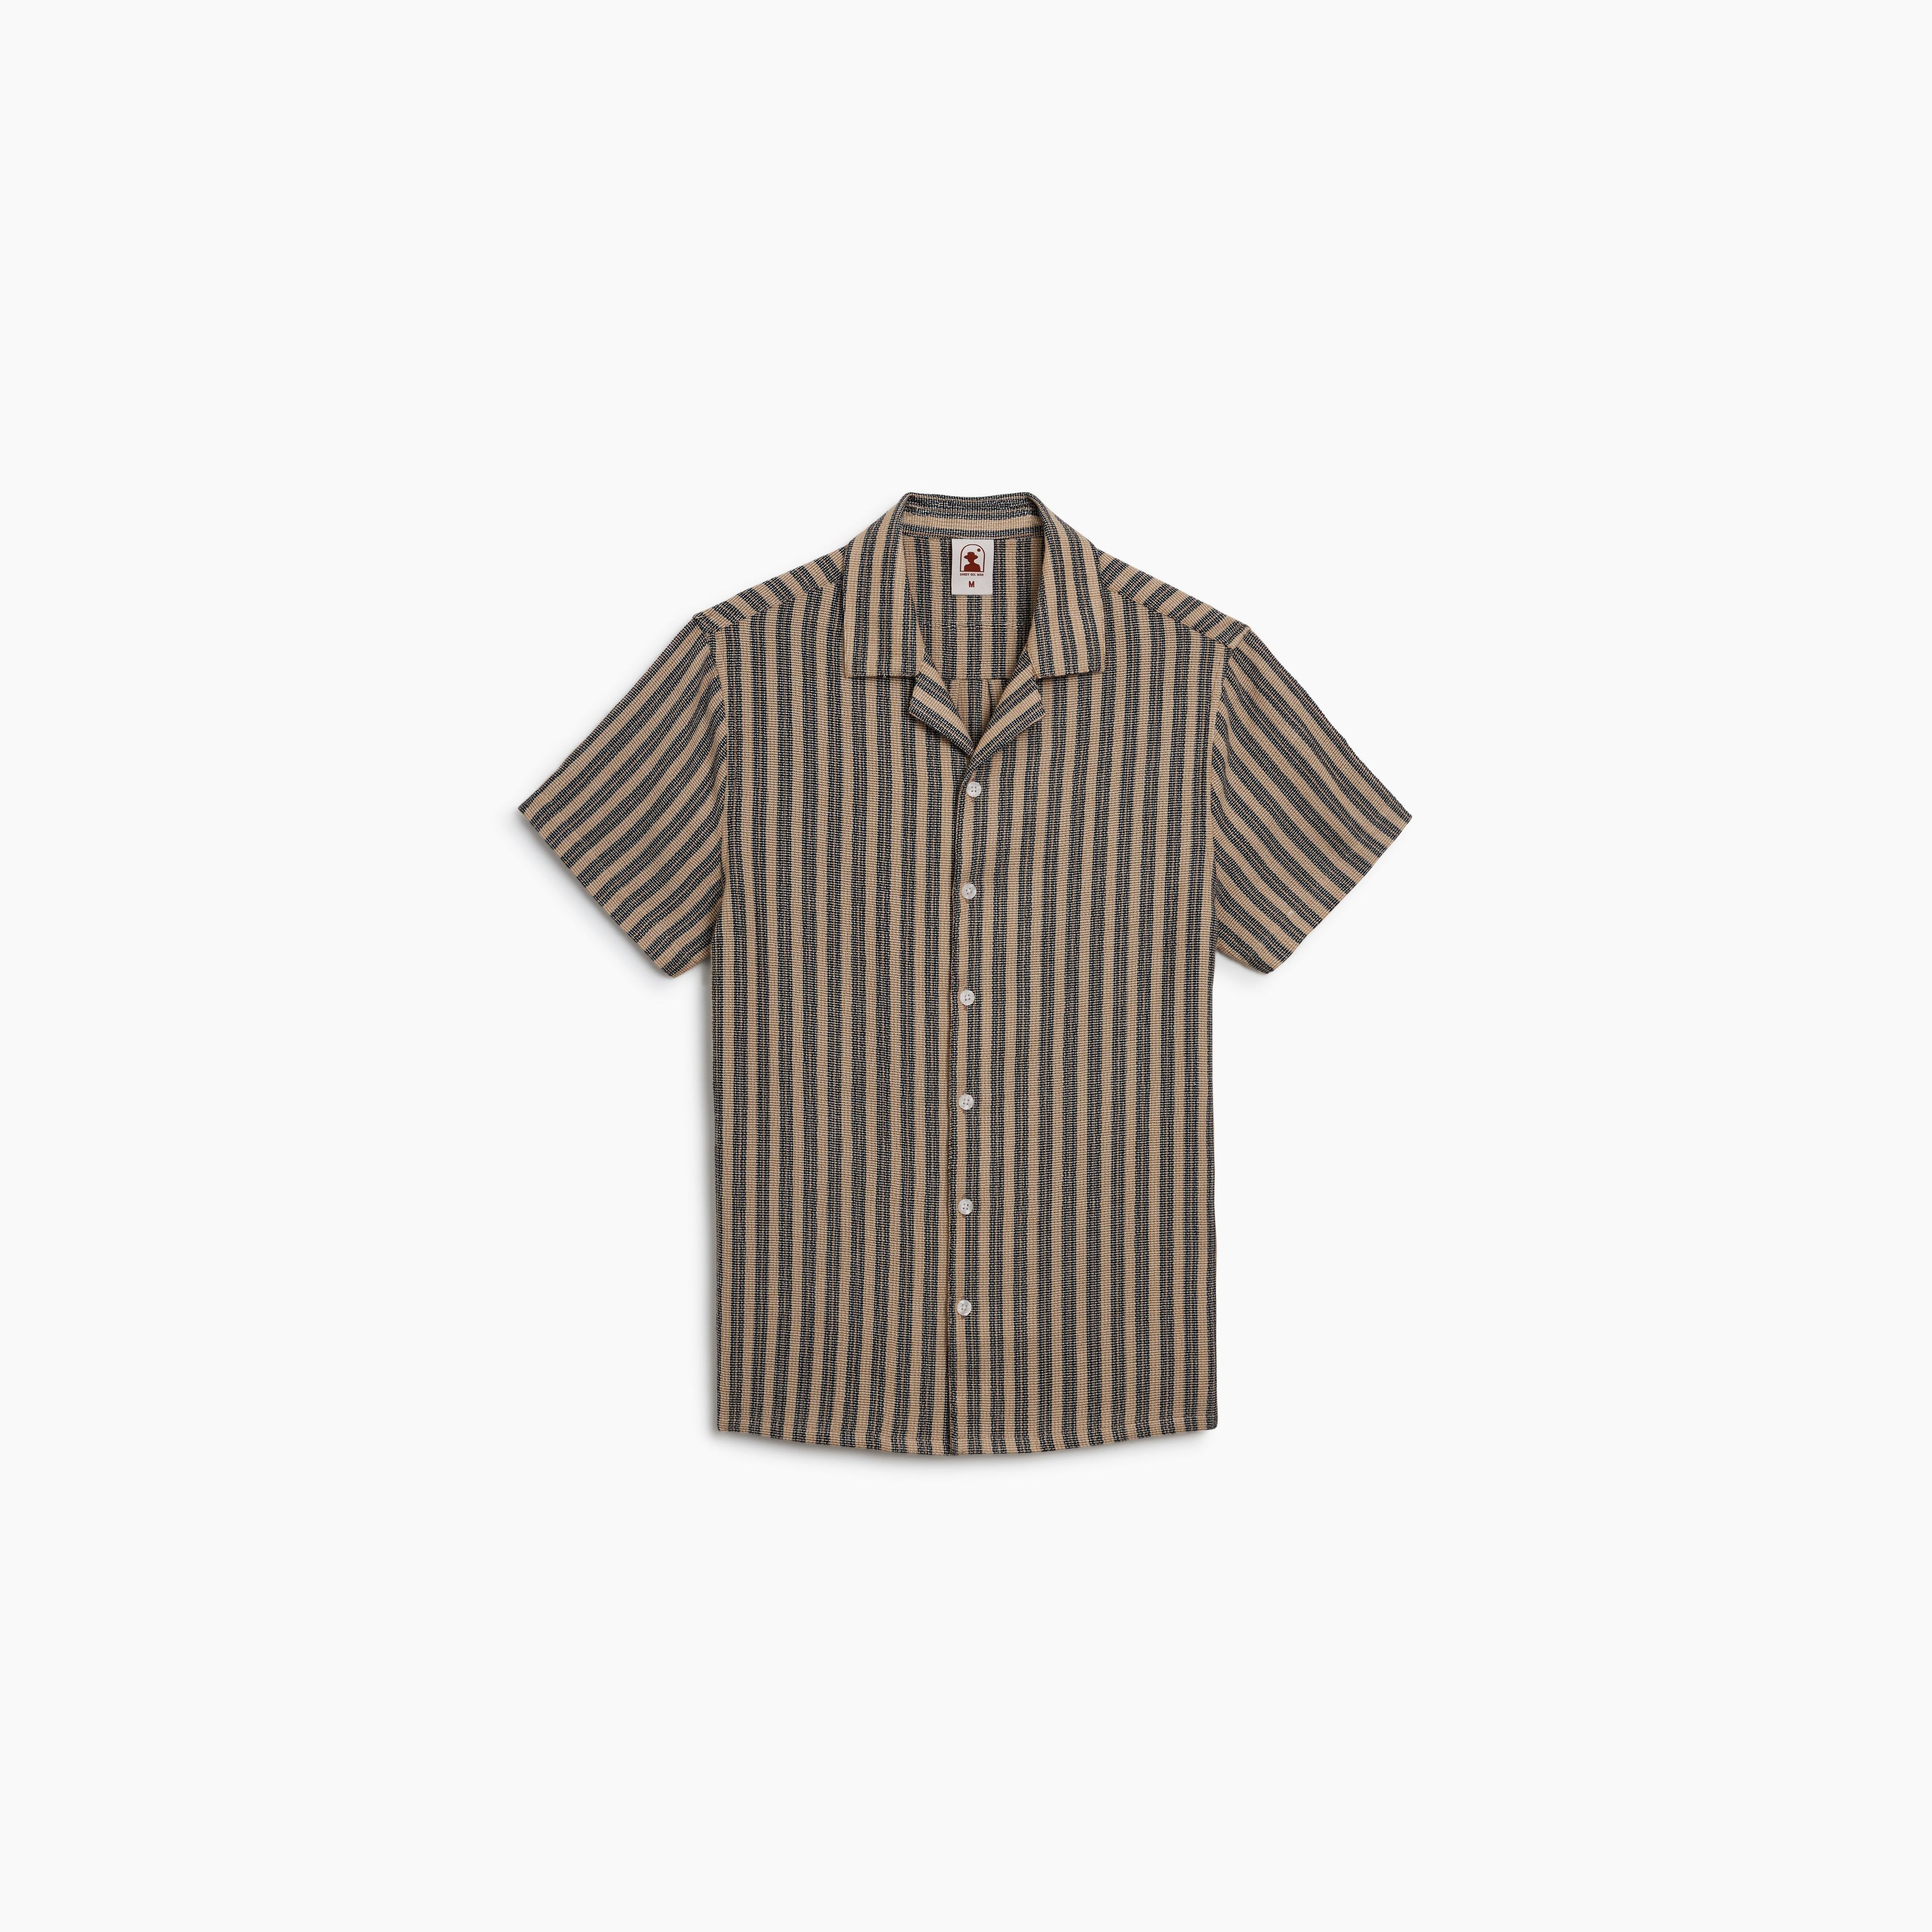 The Palma Shirt - Cacao Stripe